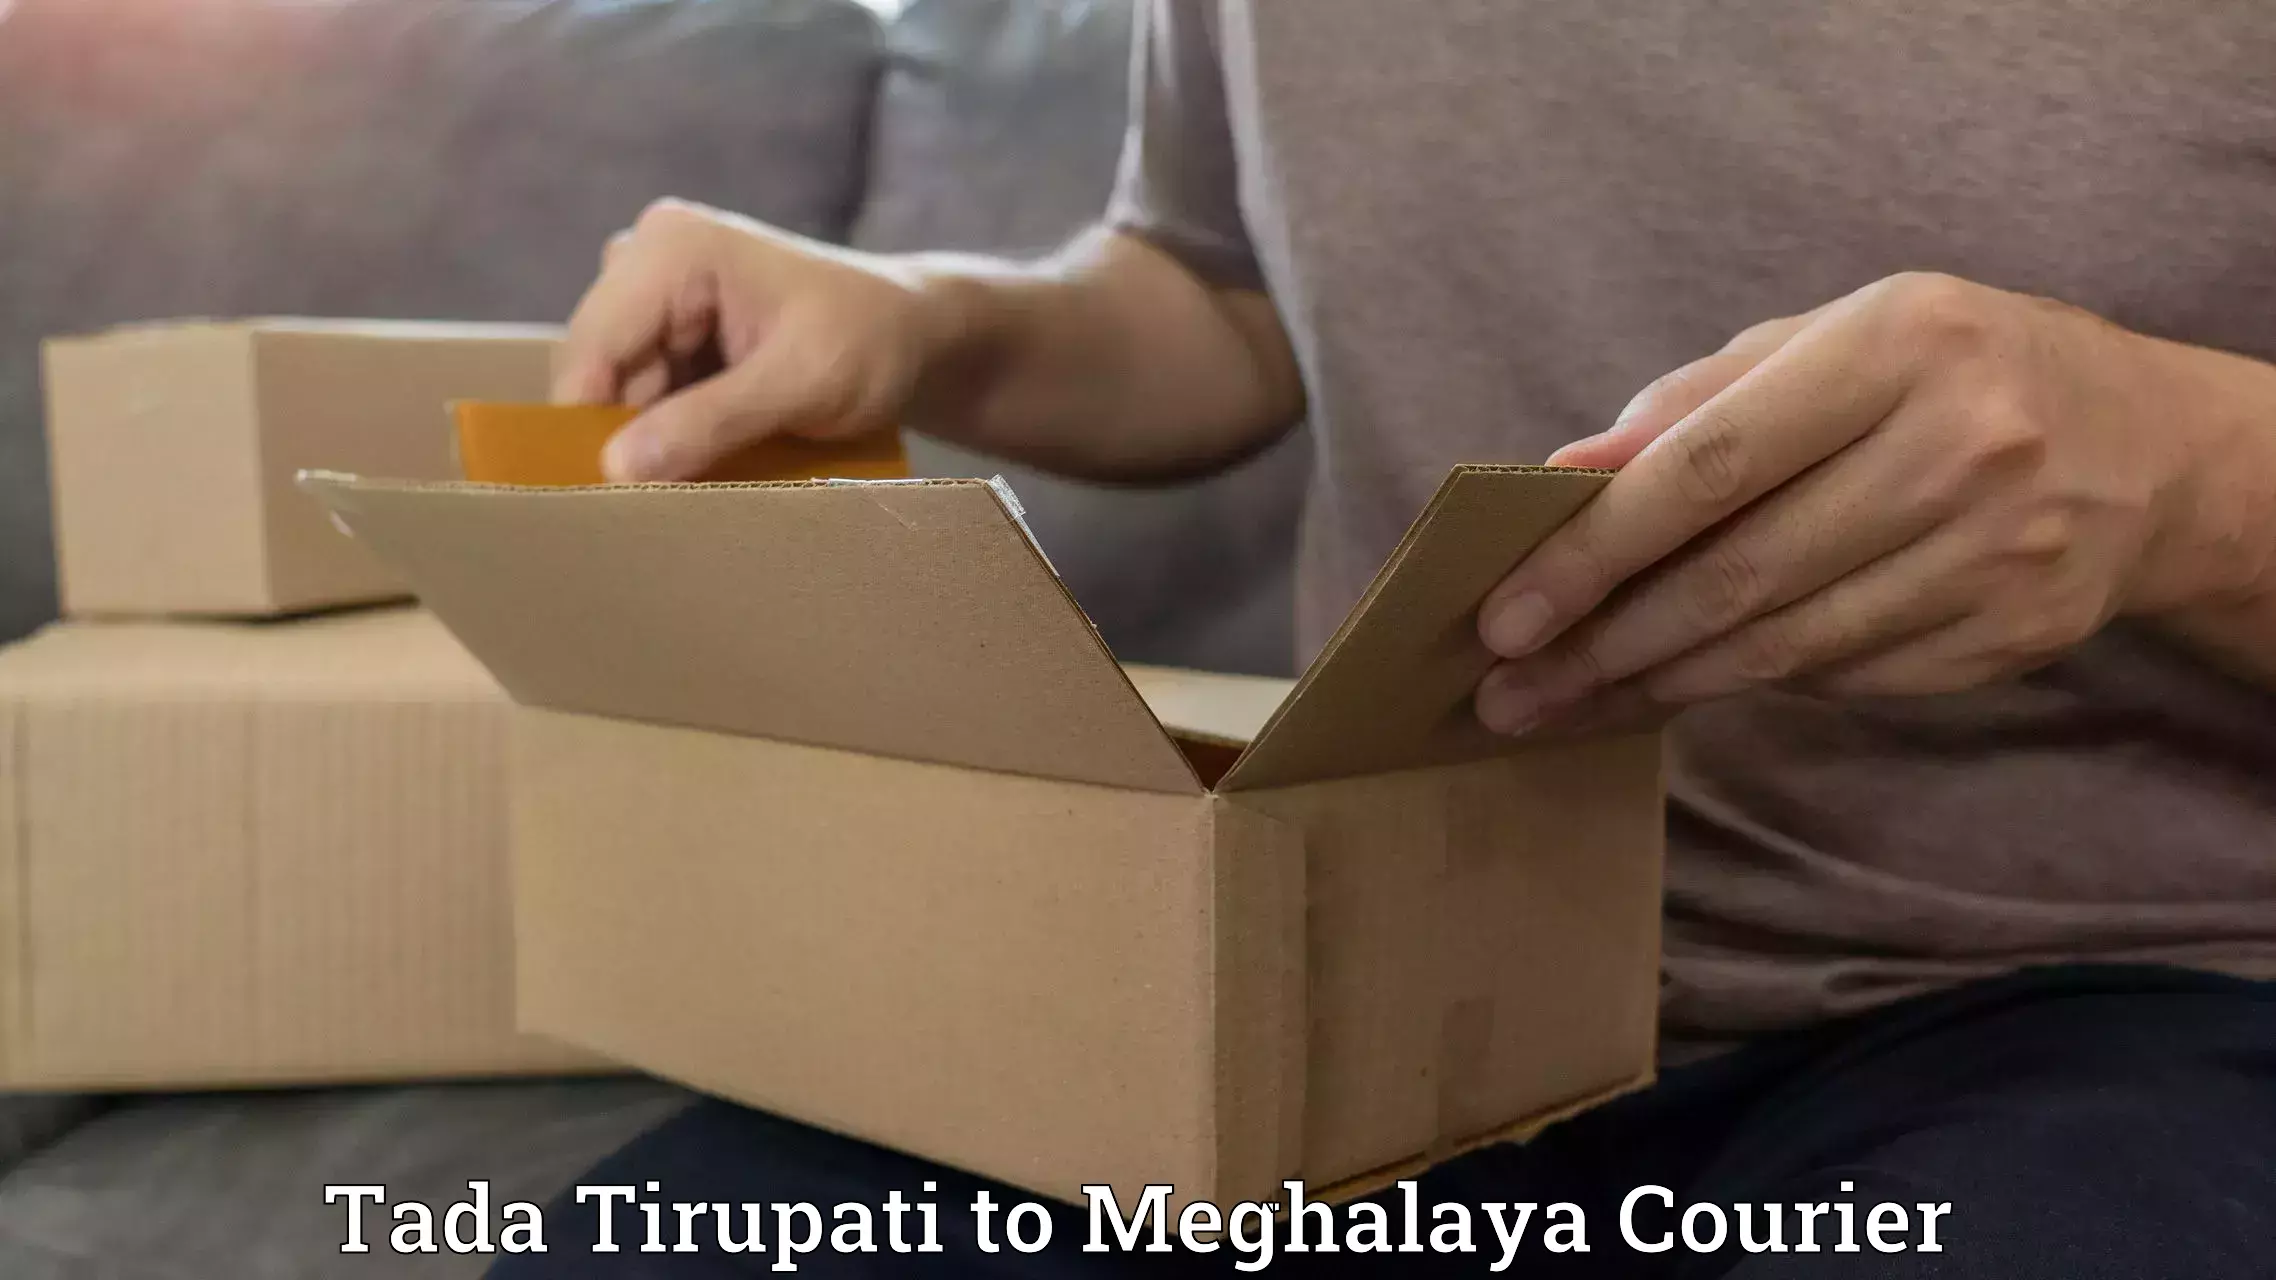 Local delivery service Tada Tirupati to Meghalaya